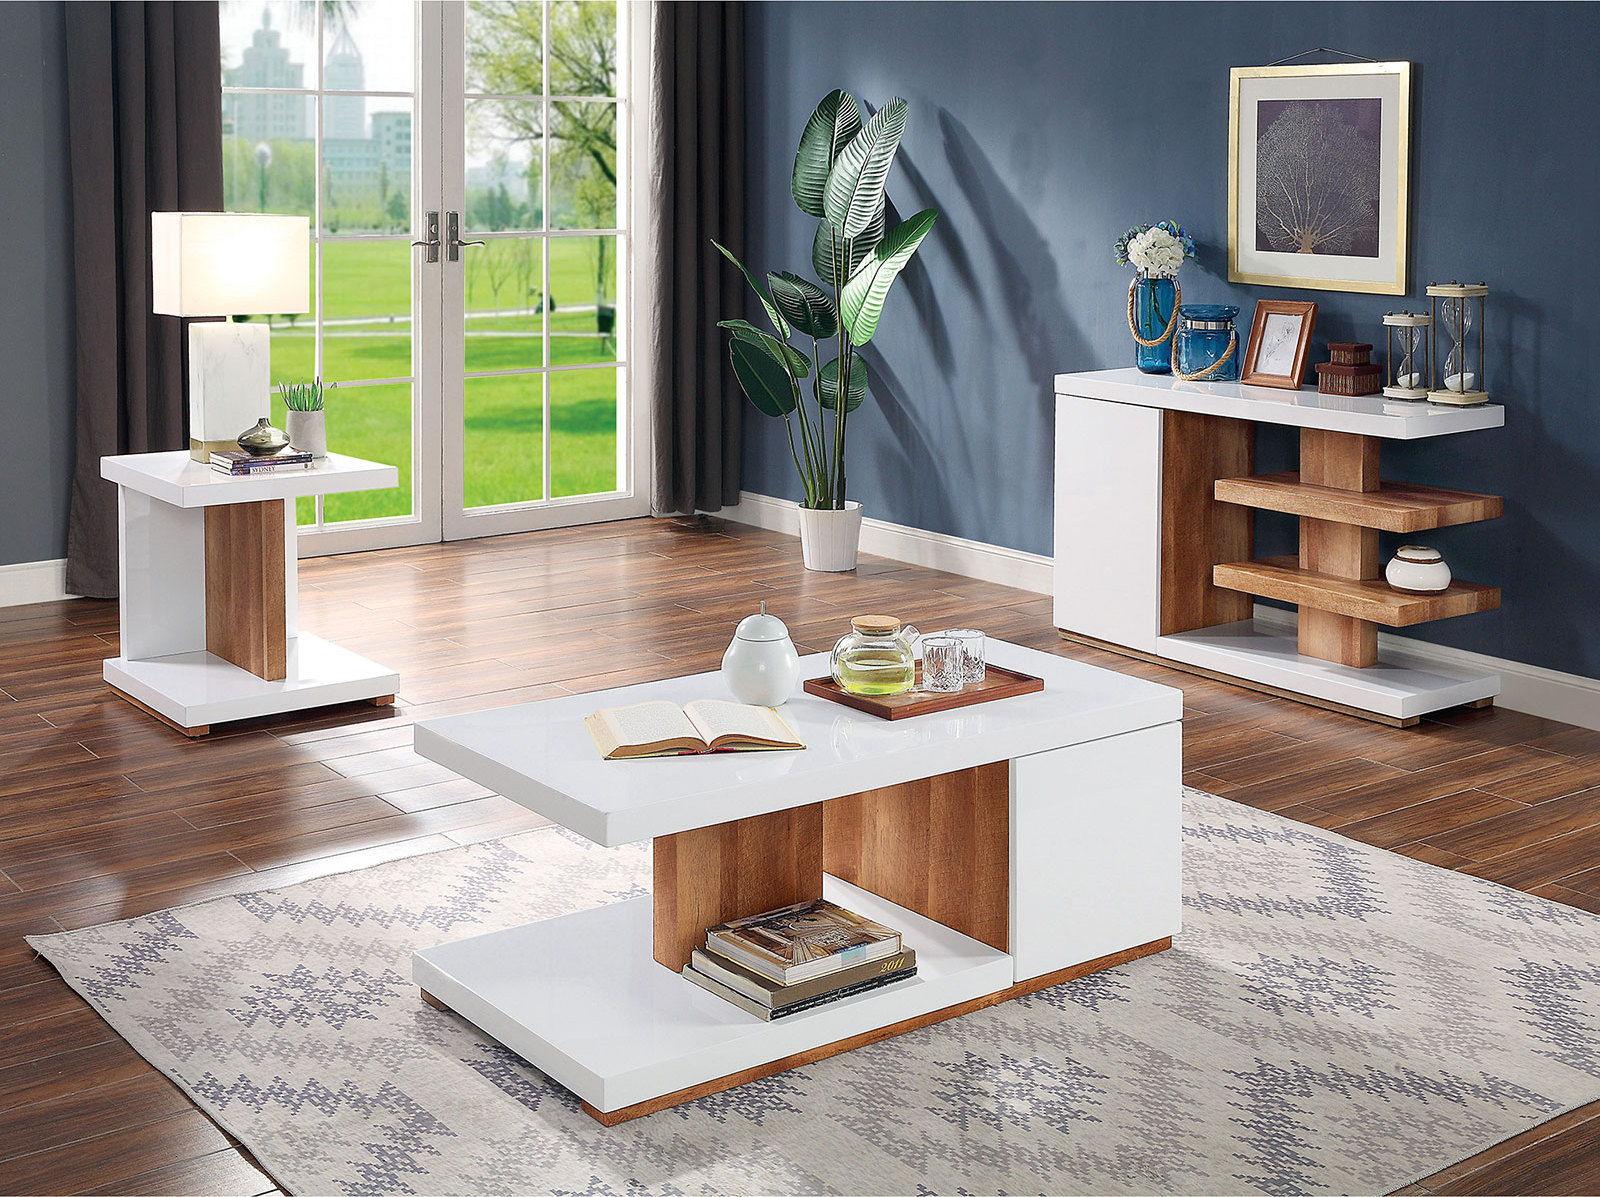 Furniture of America - Moa - Coffee Table - White / Natural Tone - 5th Avenue Furniture